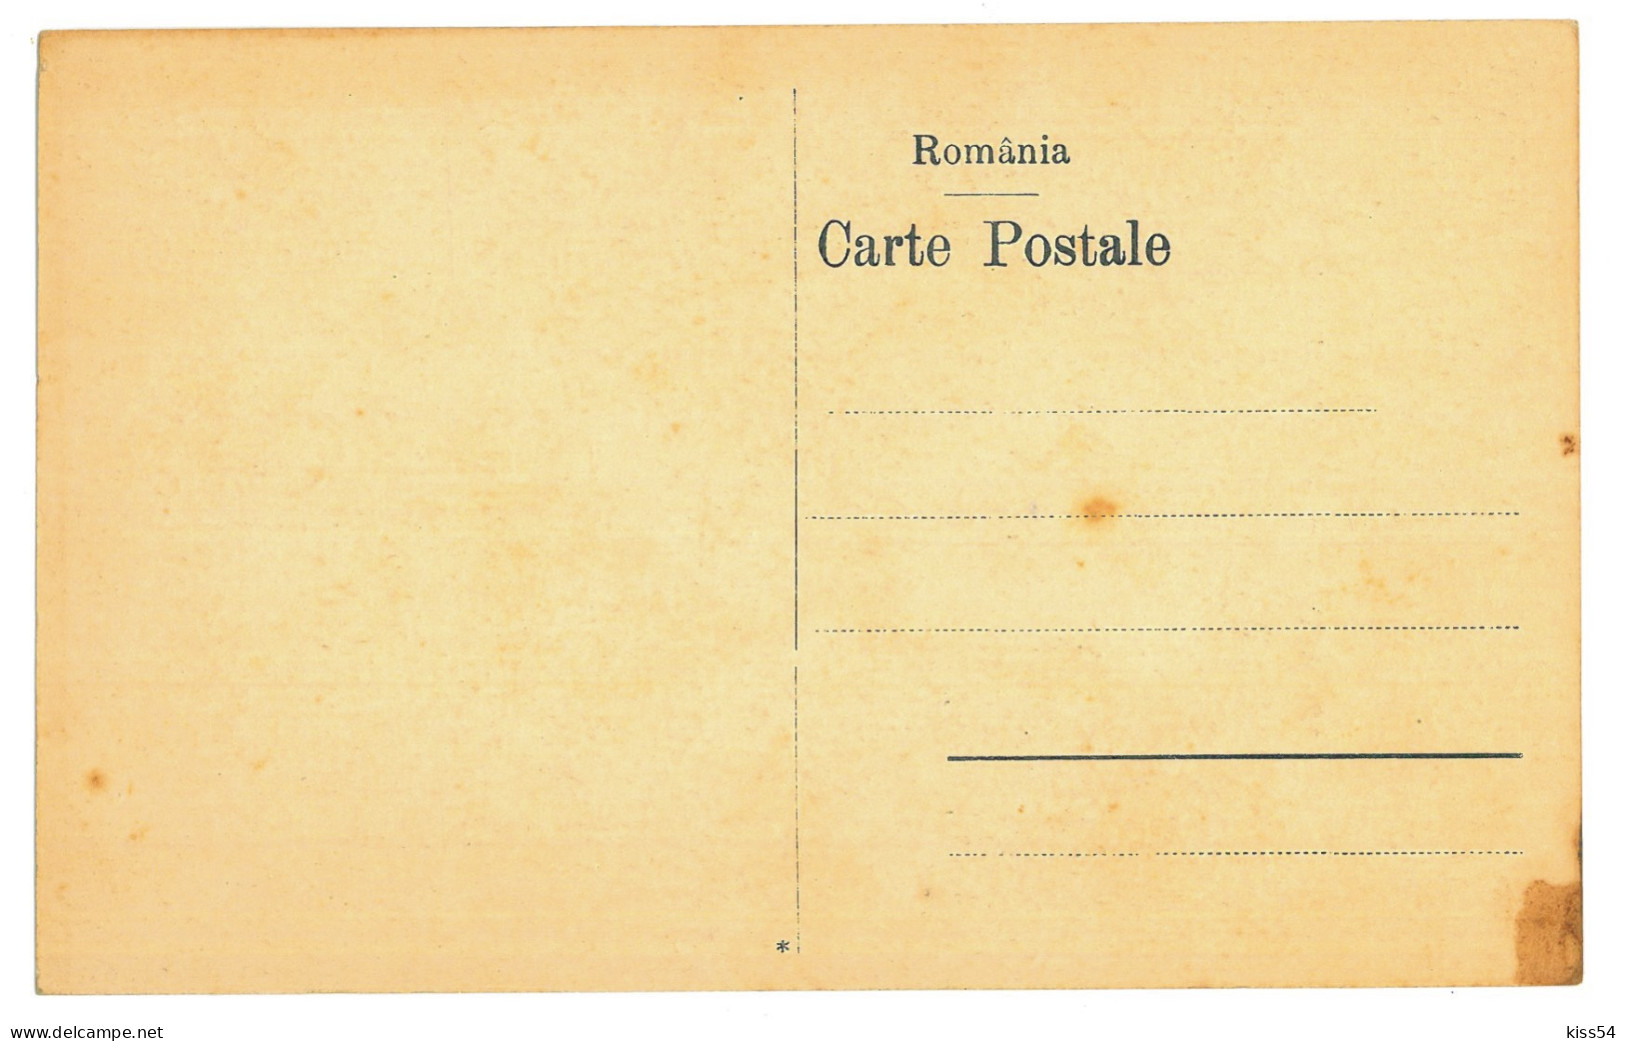 RO 83 - 24320 GORJ, Surduc Pass, Romania - Old Postcard - Unused - Romania